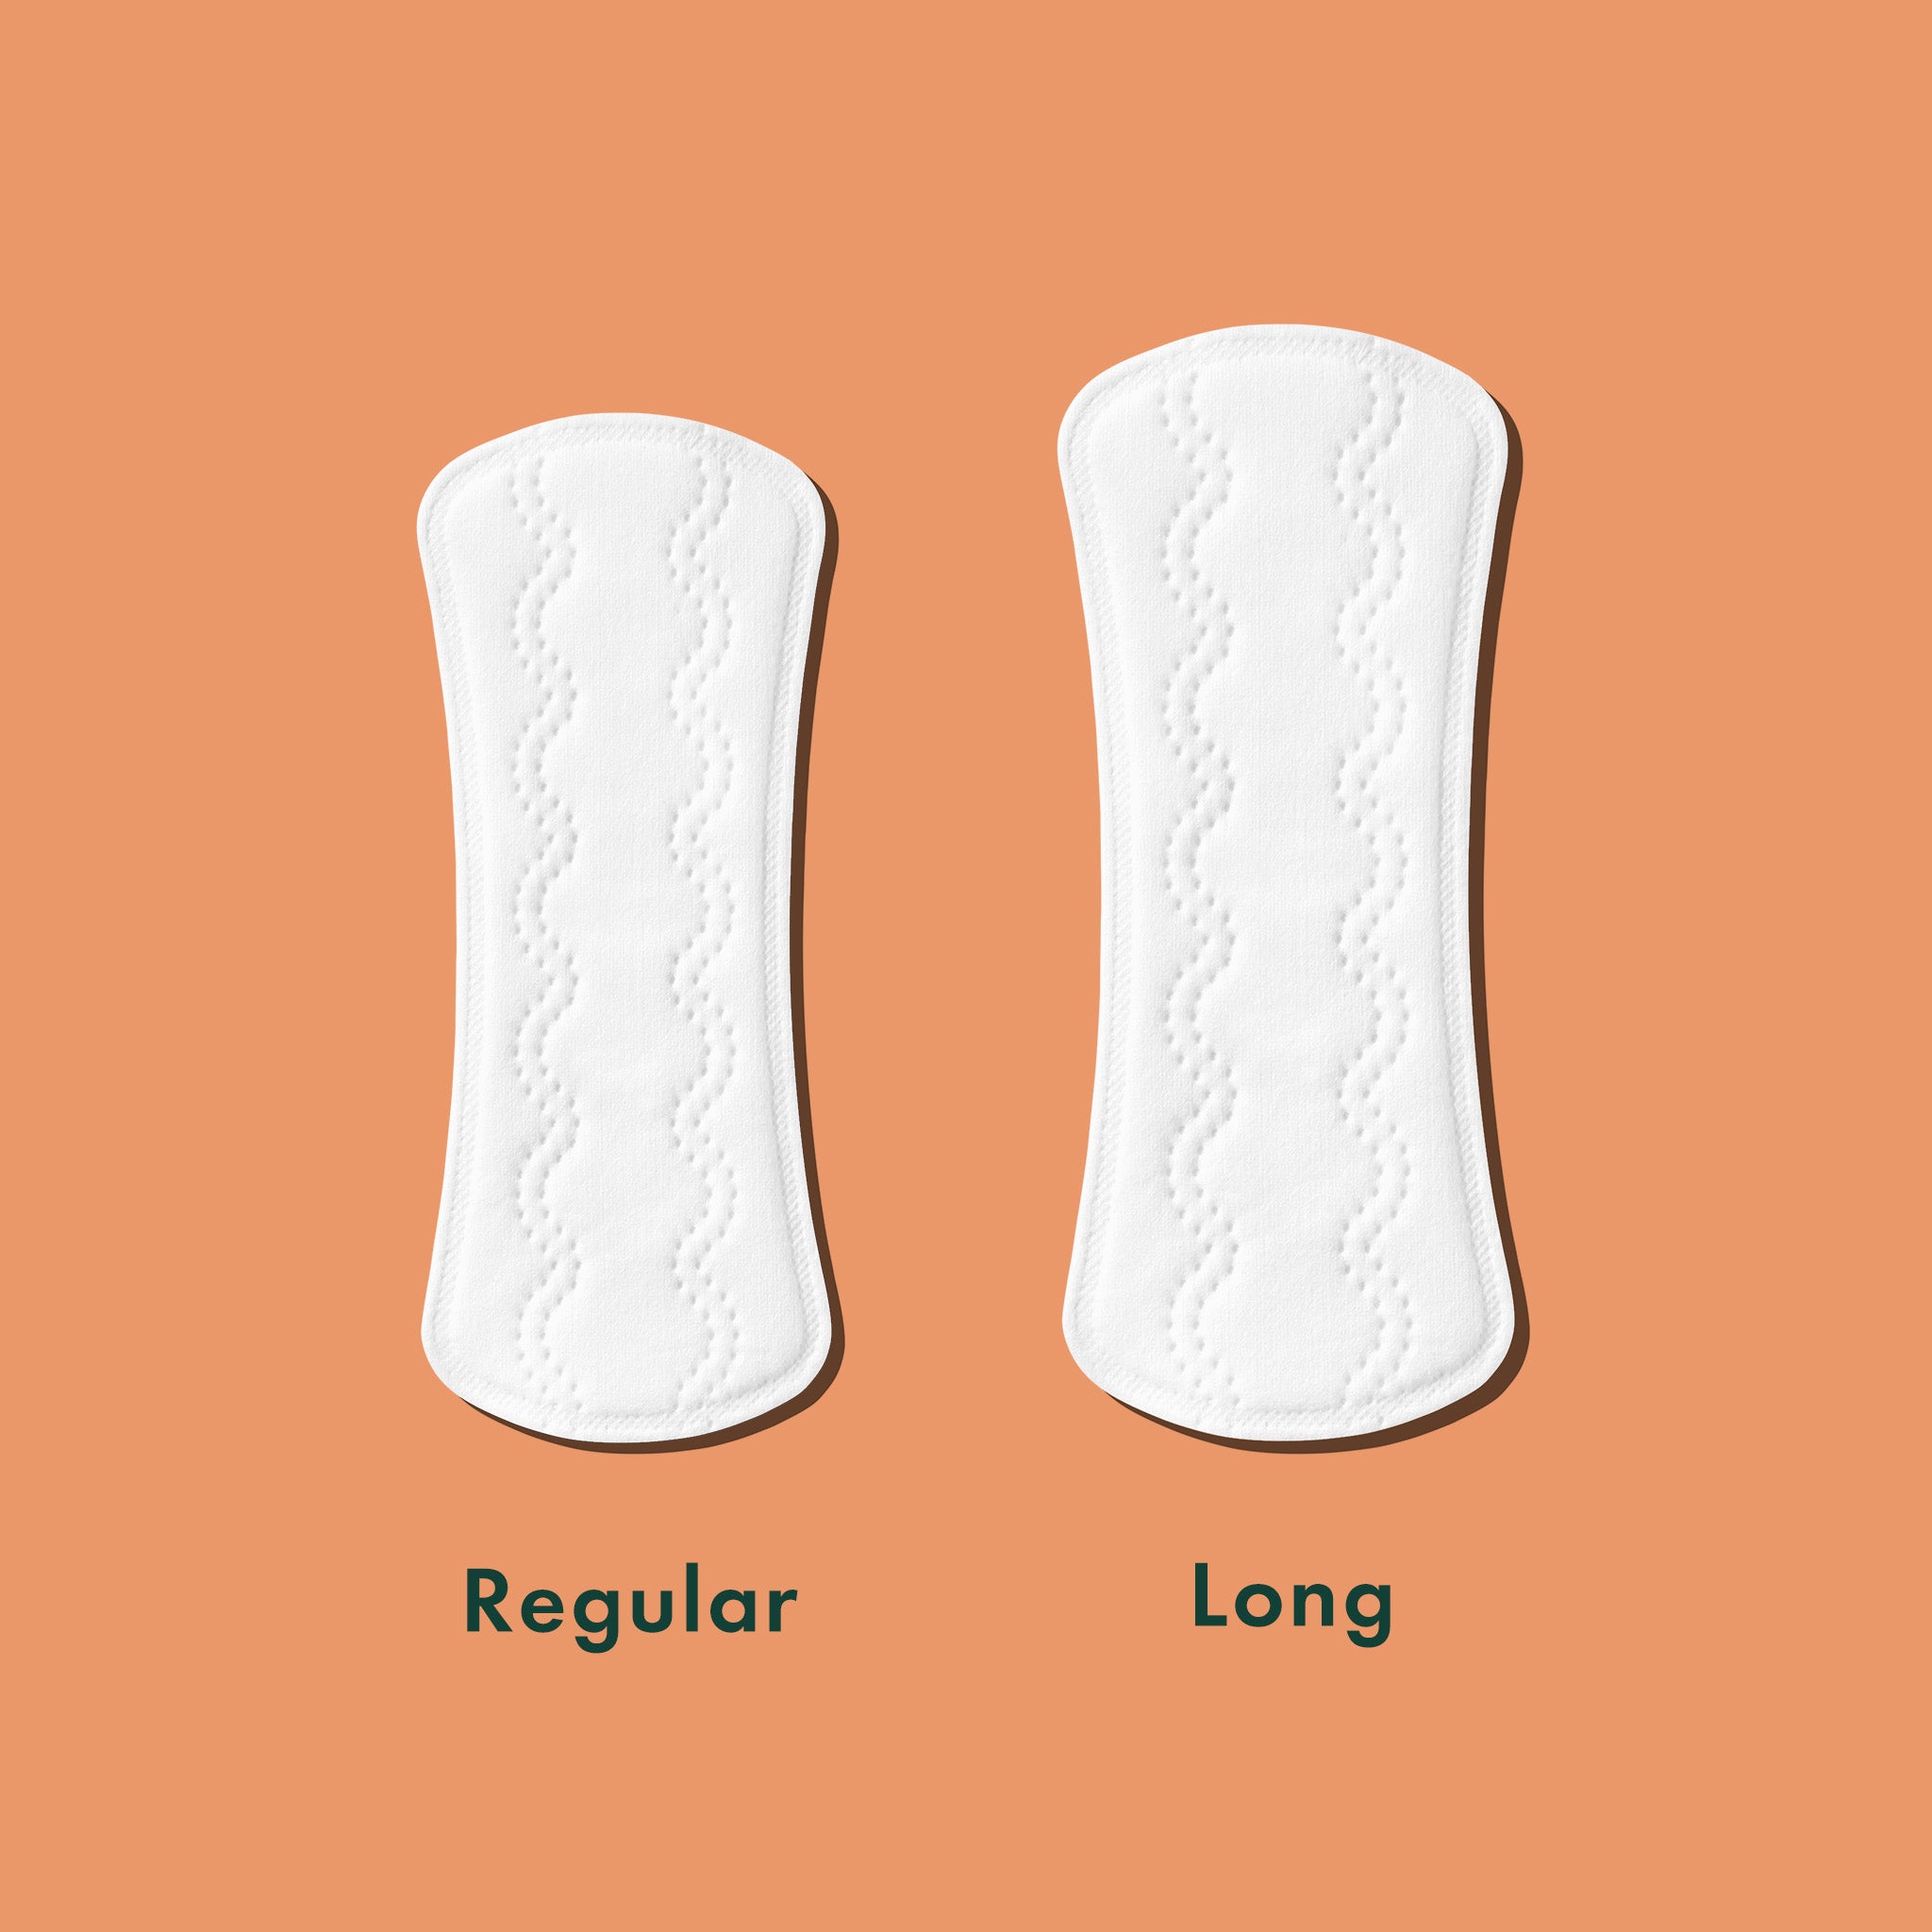 Review of #RAEL Disposable Period Underwear S-M - 8ct by Lexington, 4264  votes